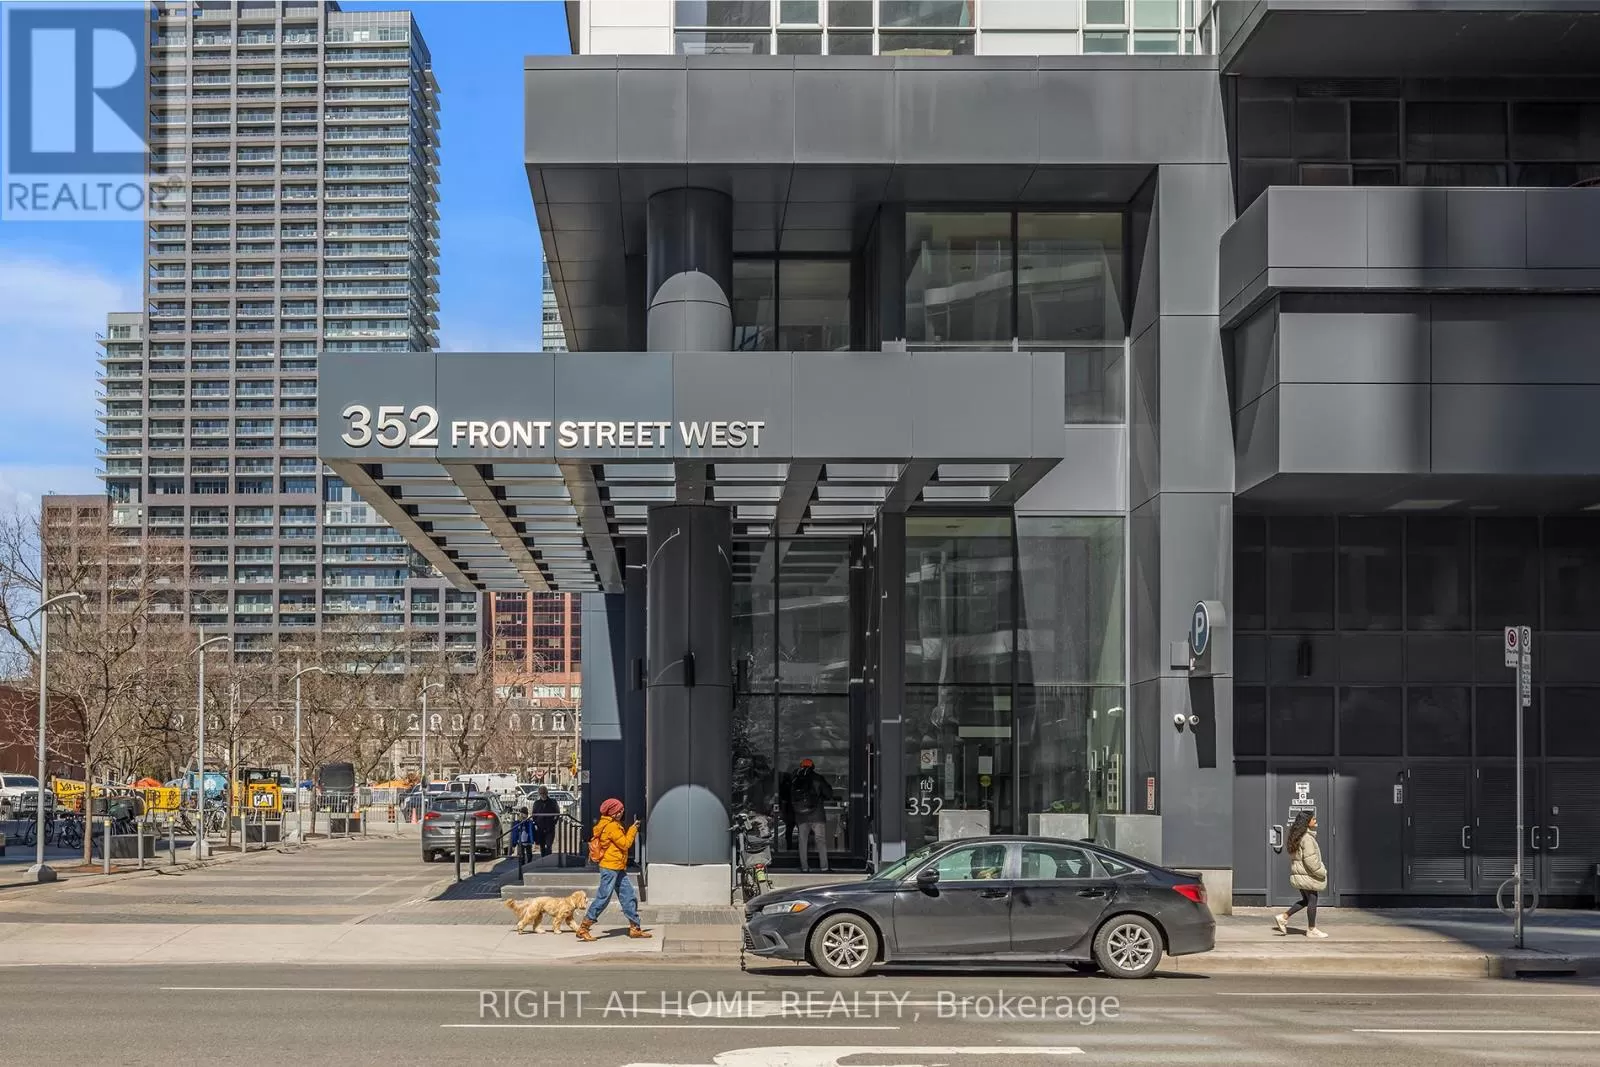 Apartment for rent: 806 - 352 Front Street W, Toronto, Ontario M5V 0K3